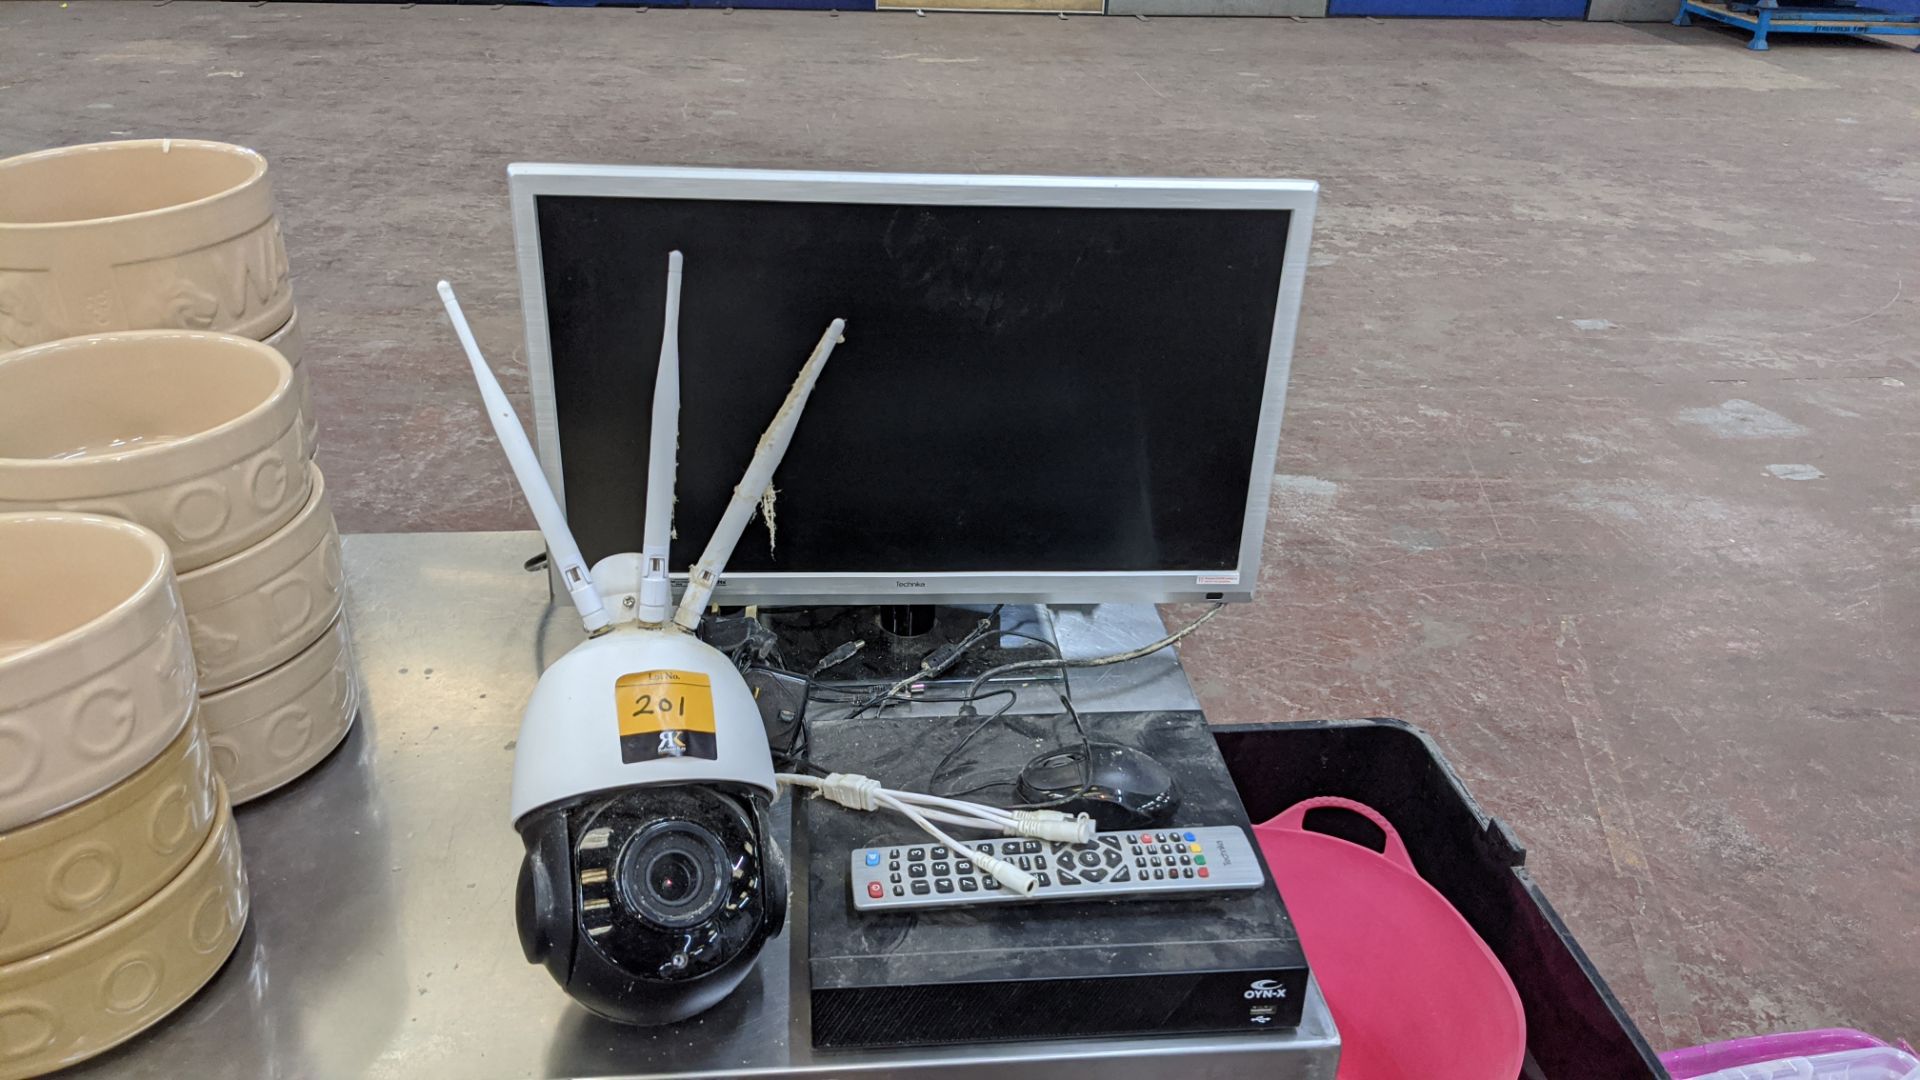 Oyn-X CCTV equipment comprising hard drive recorder, movable camera & monitor